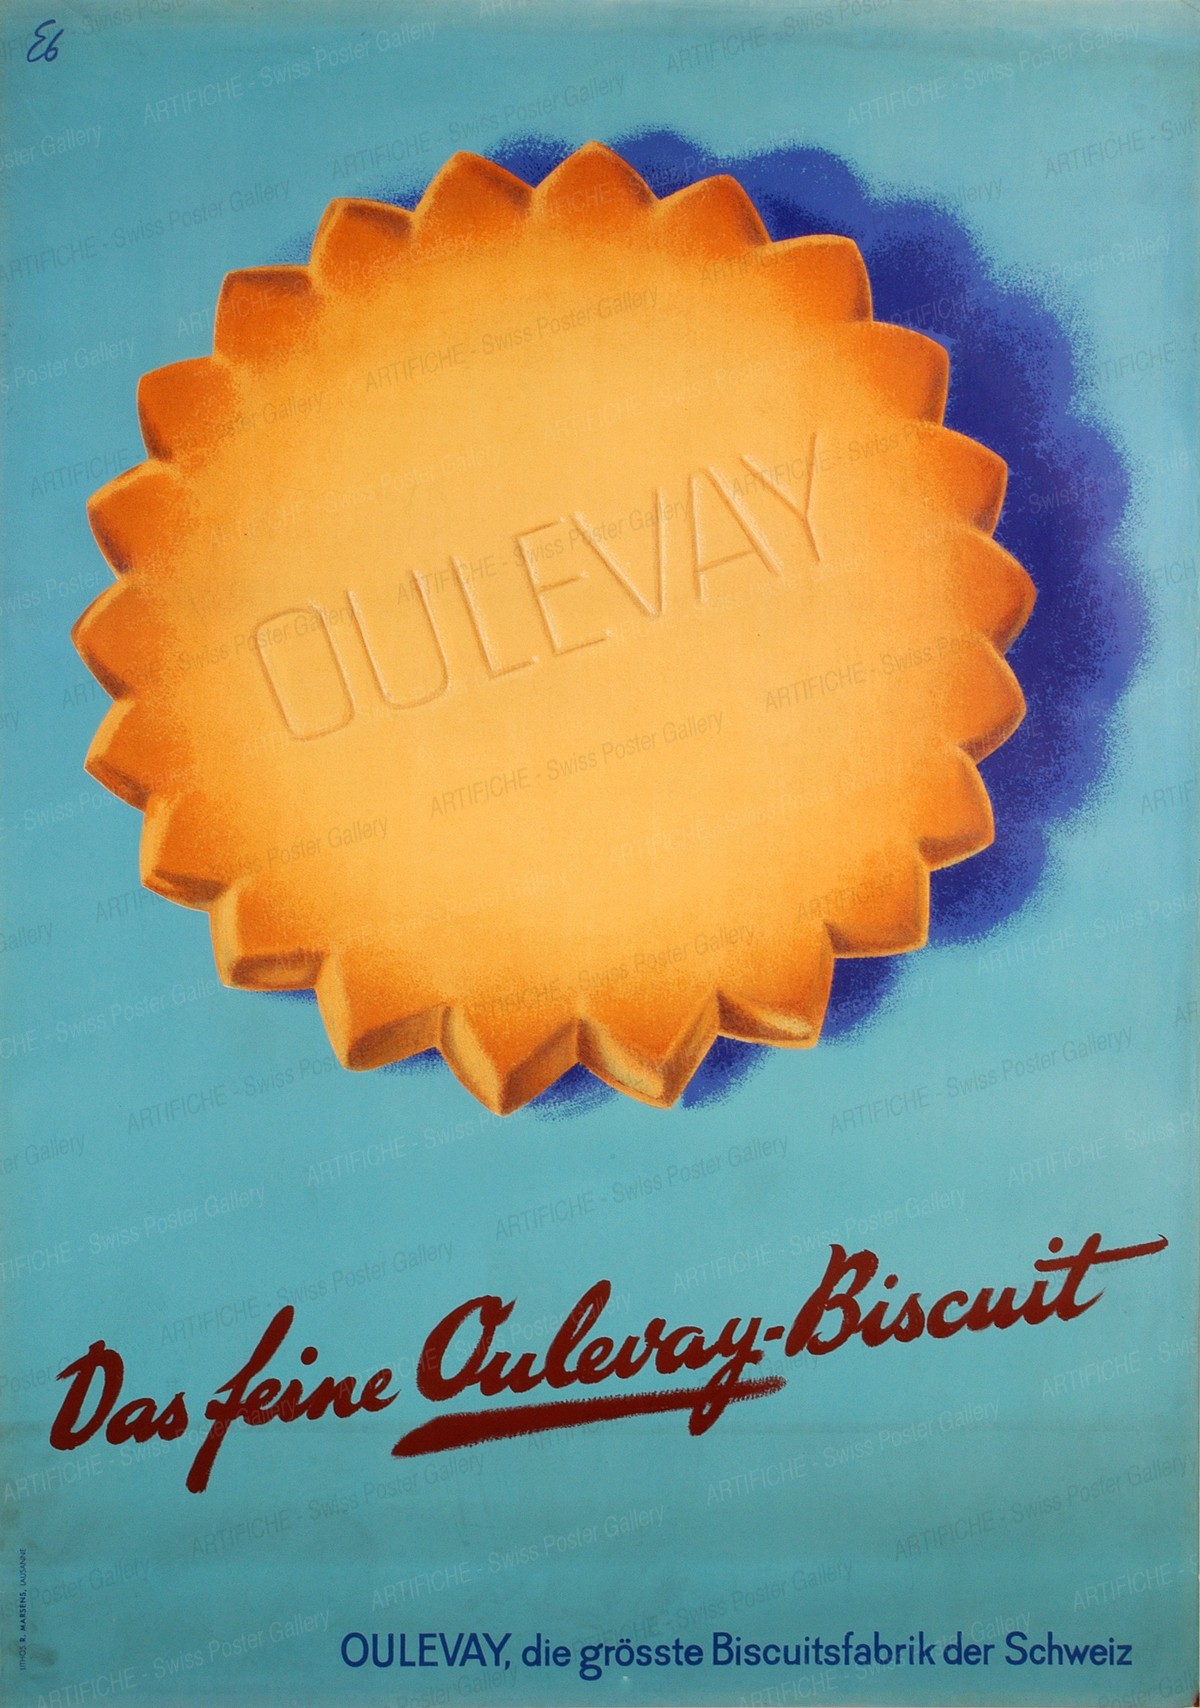 Oulevay – Das feine Oulevay Biscuit, Emil Ebner